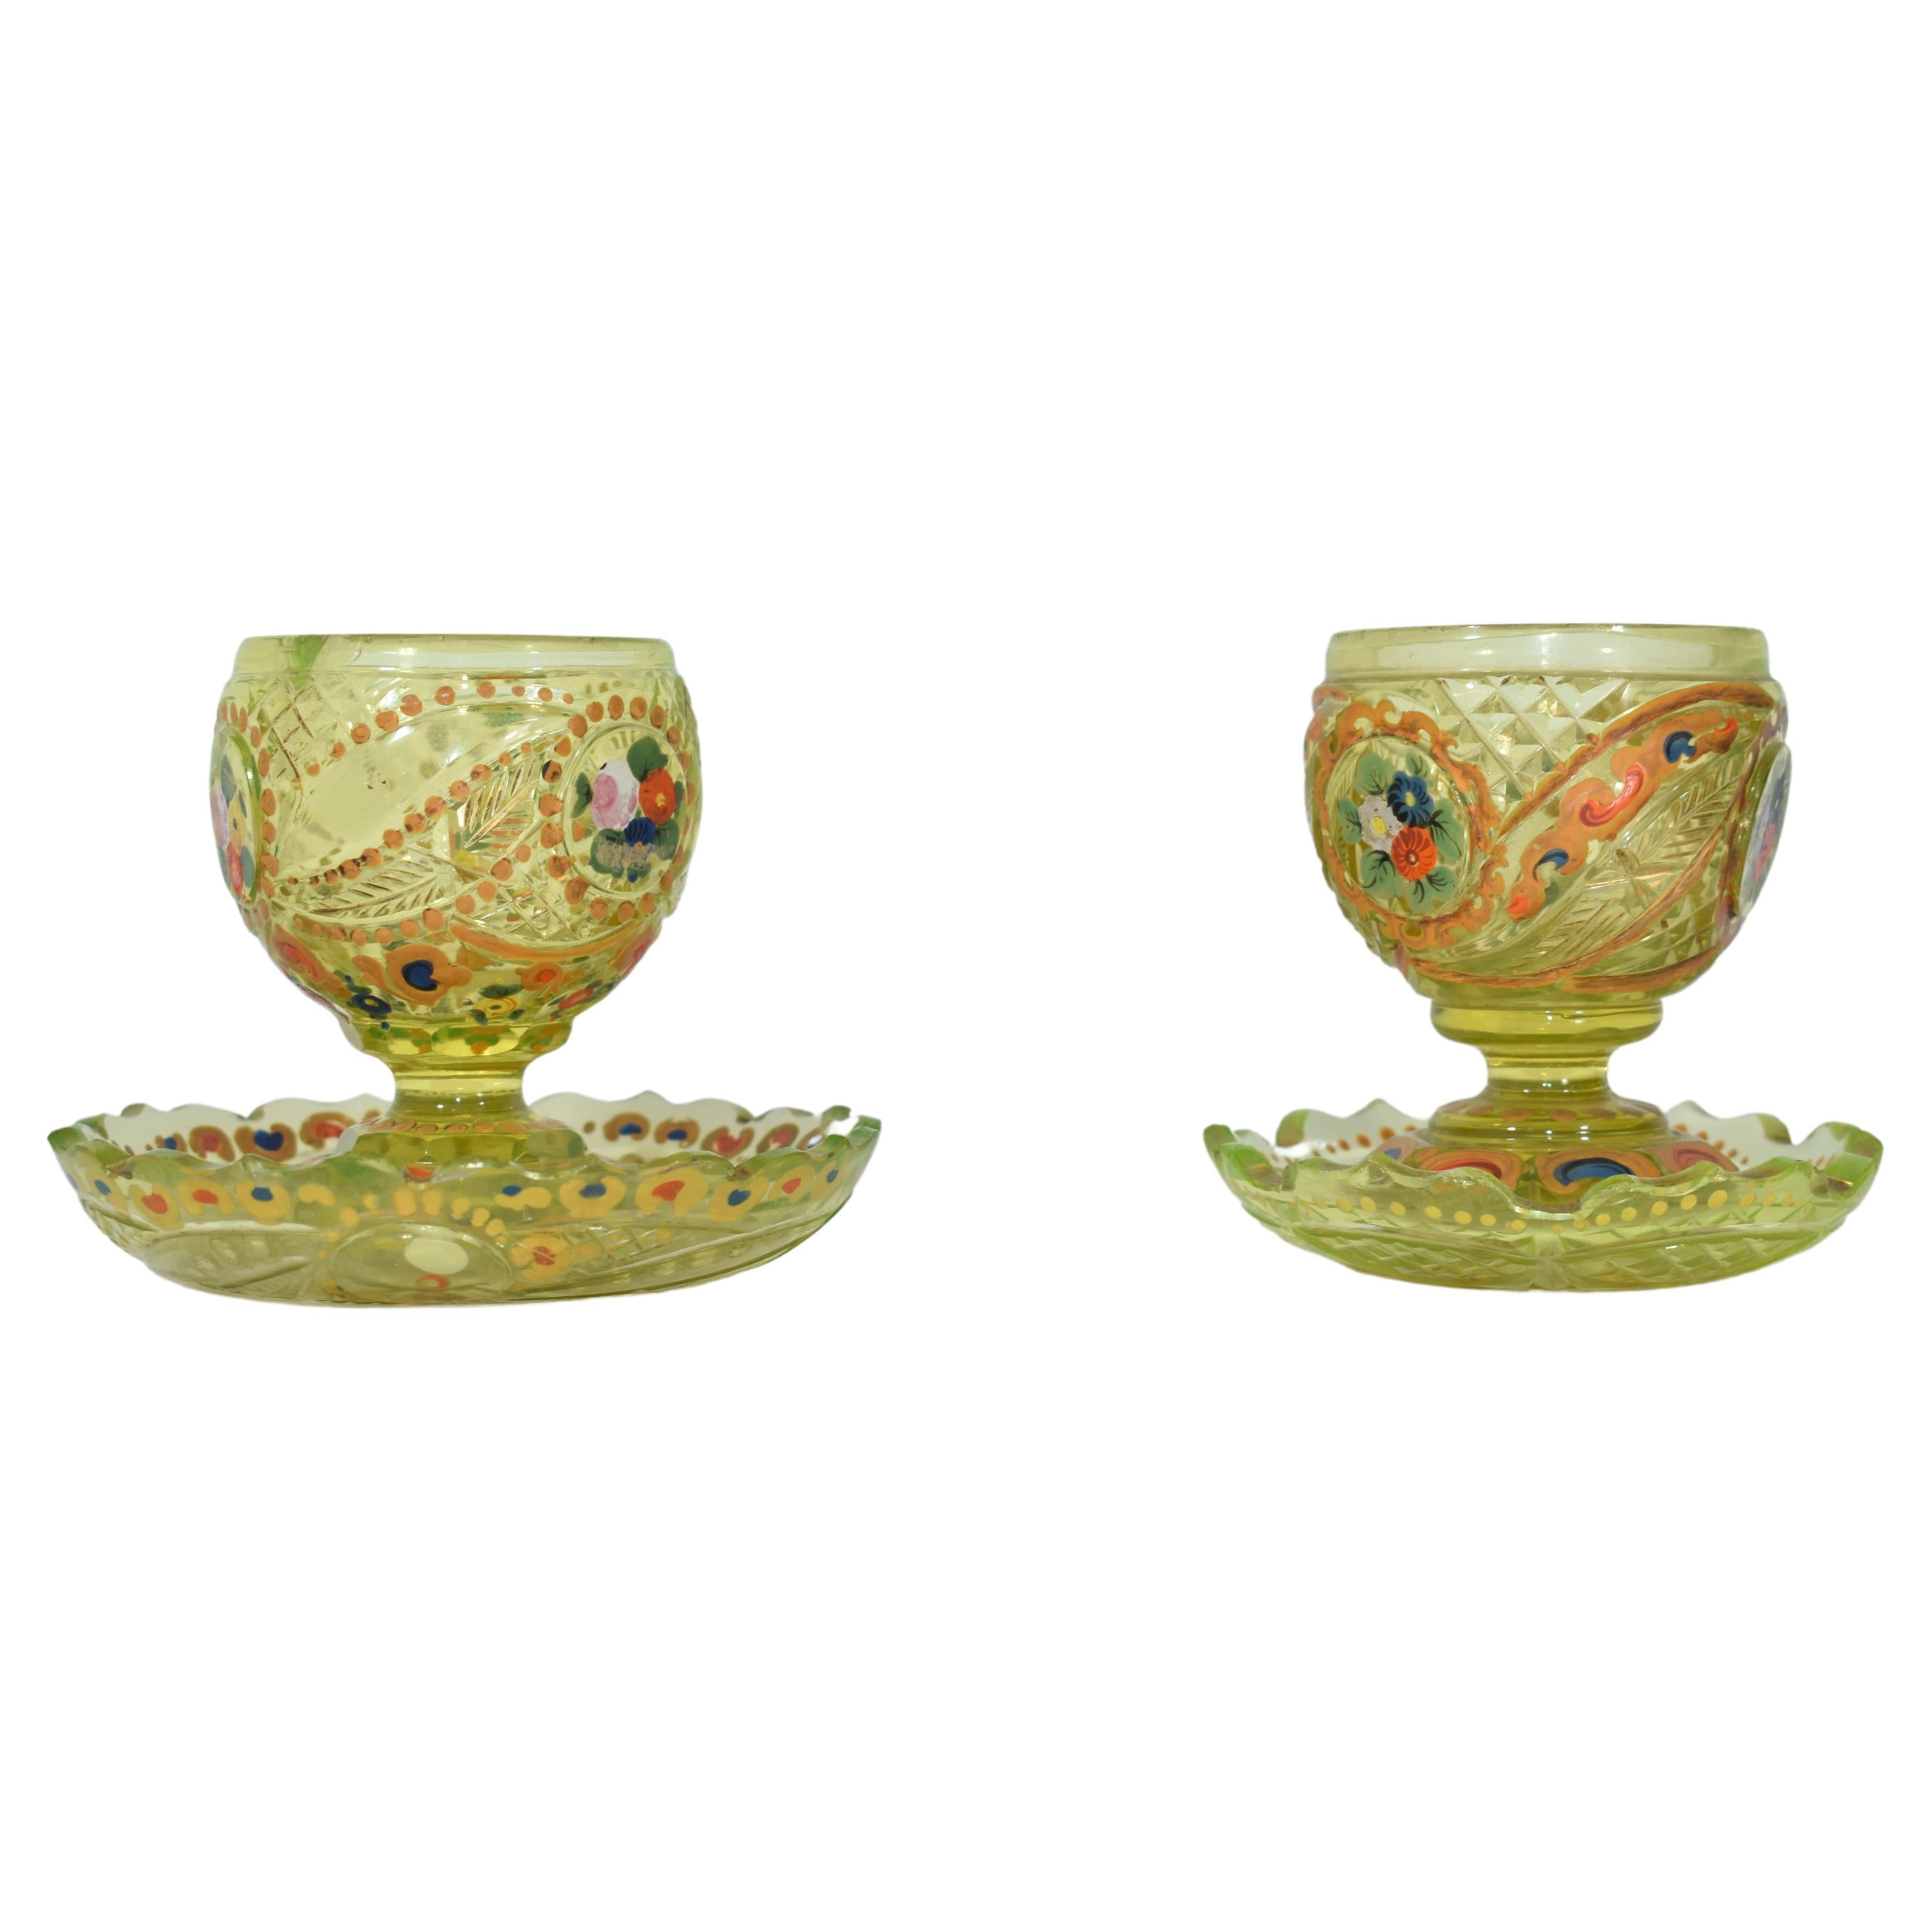 Two Antique Islamic Bohemian Uranium Glass Sugar Bowls, 19th Century